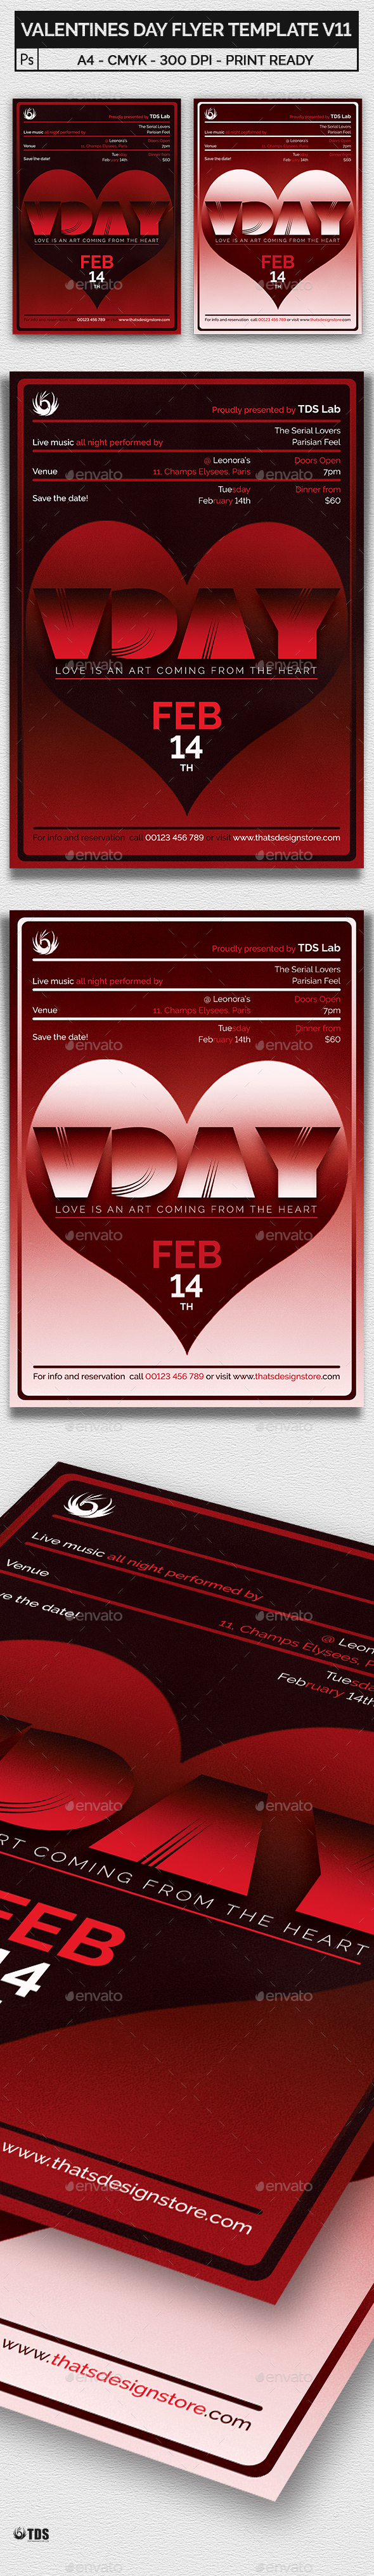 Valentines Day Flyer Template V11